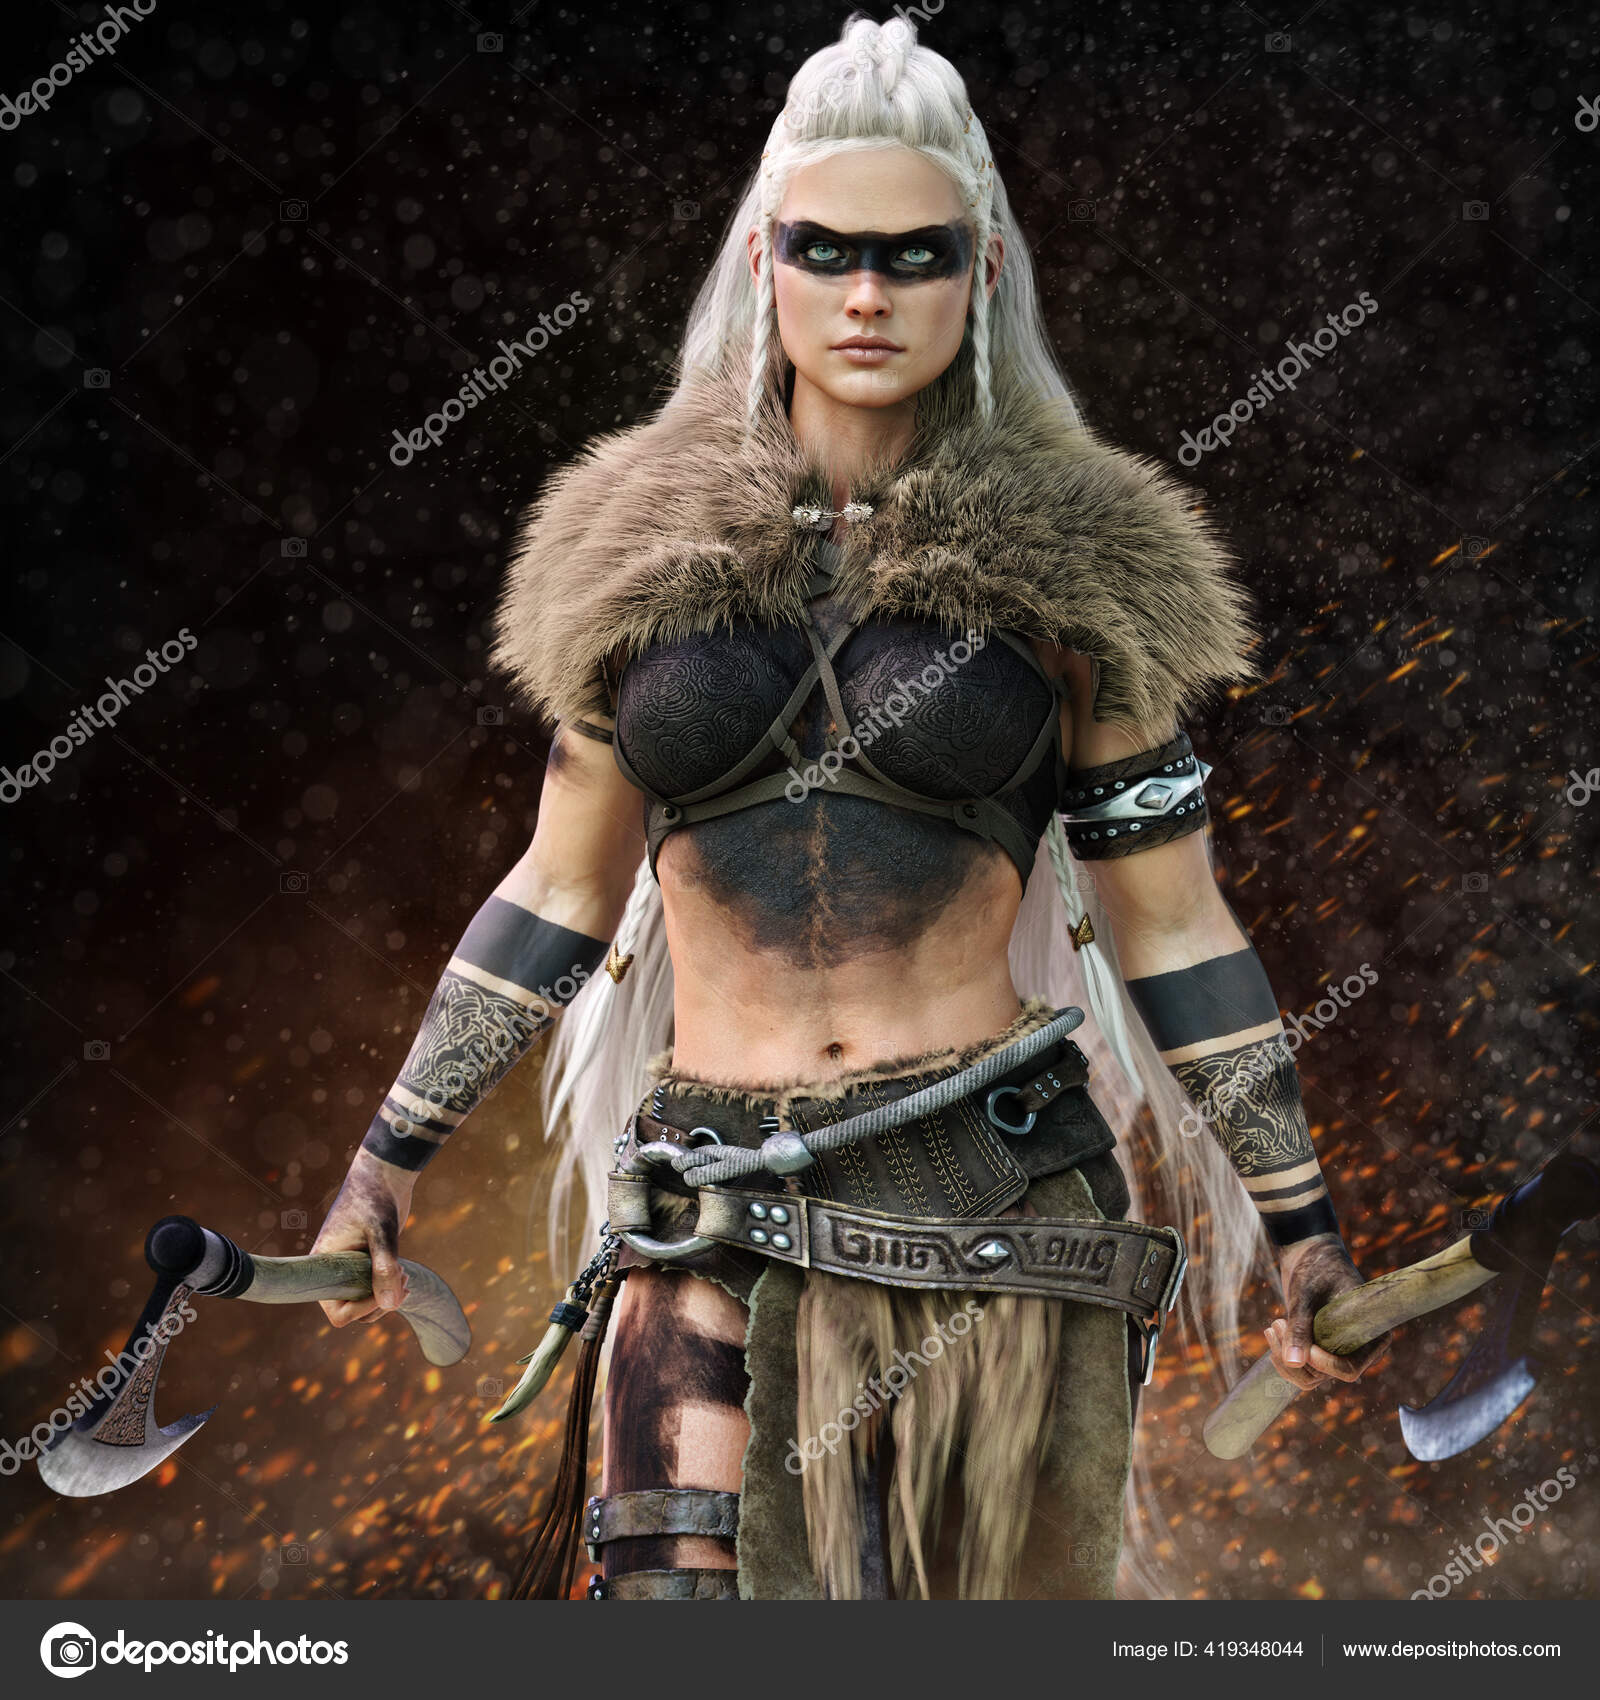 Fantasia feminino de viking bárbaro - Barbarian Viking Womens Costume